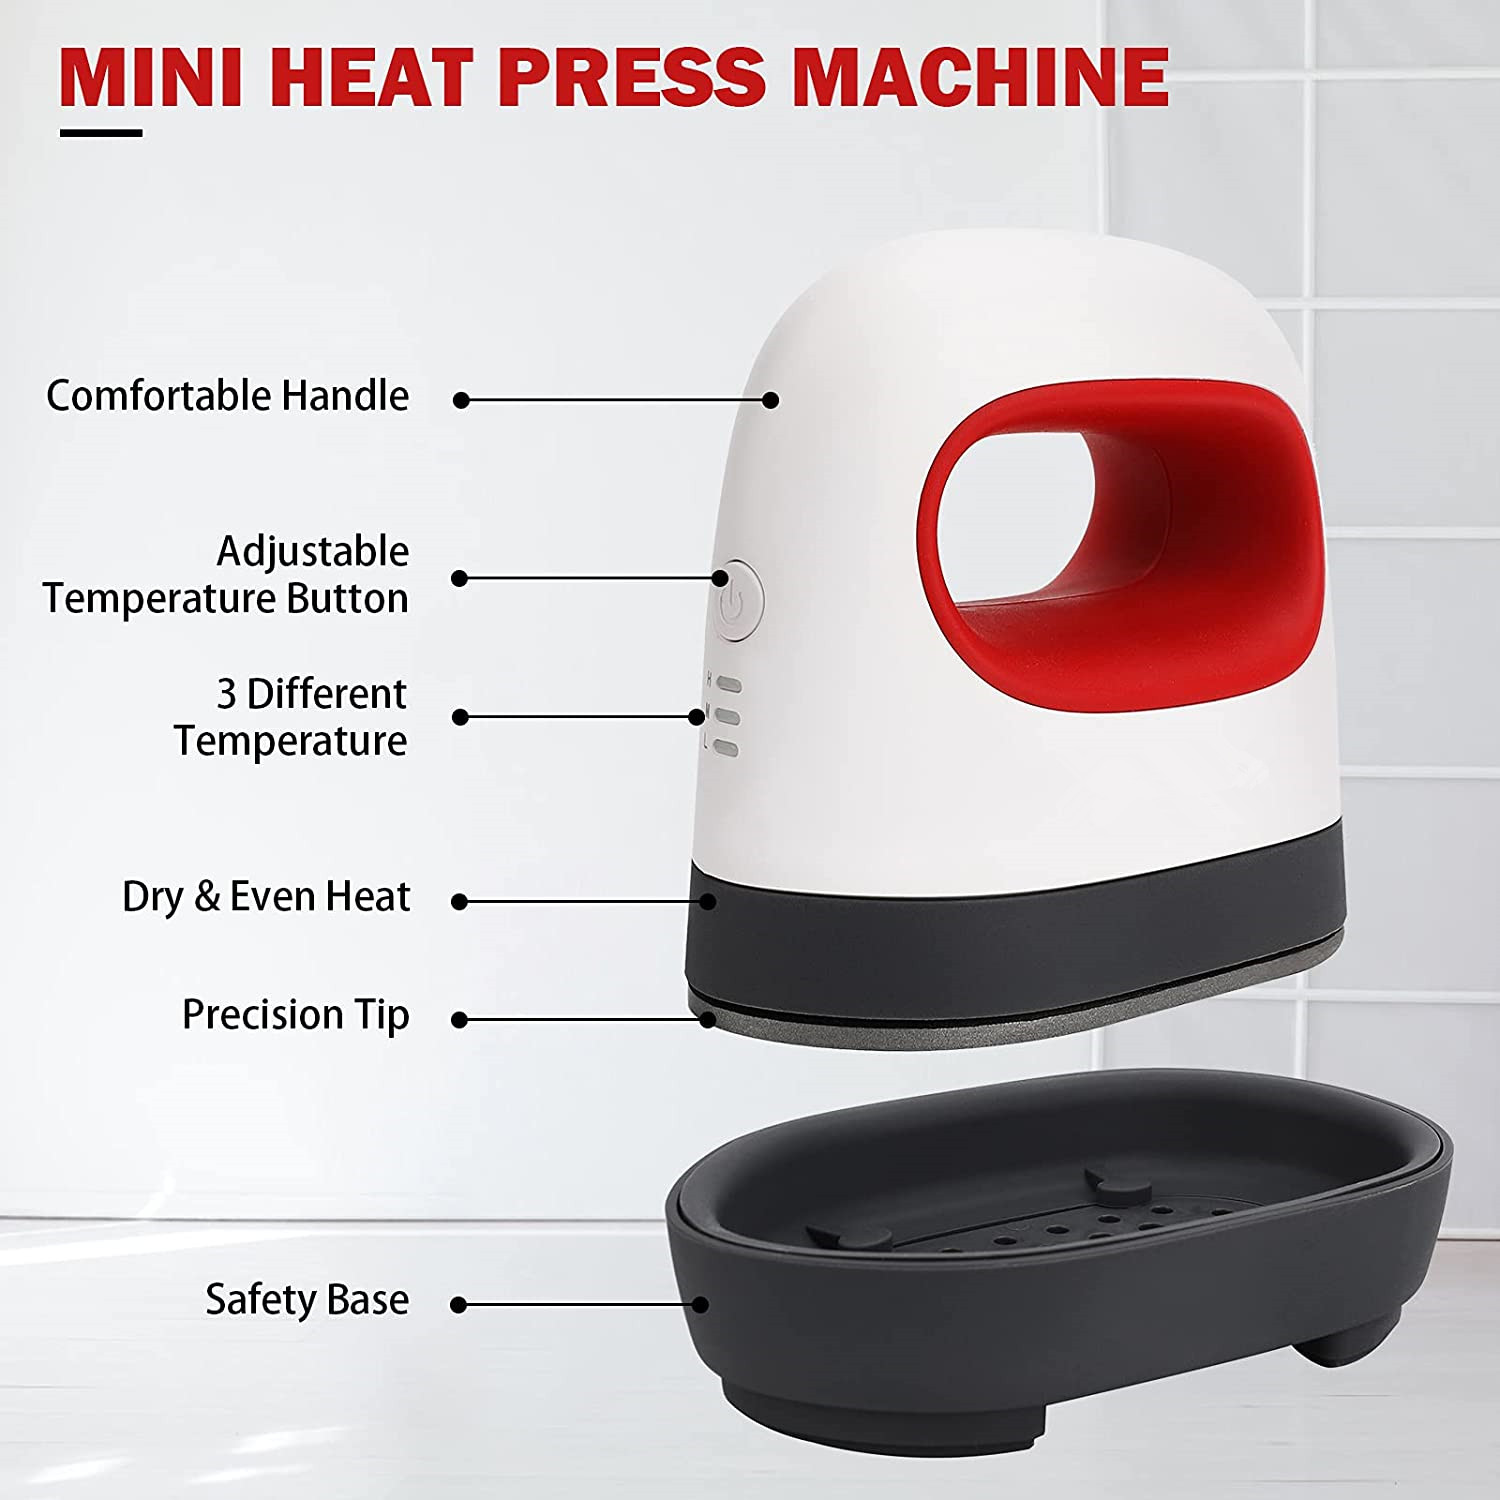 Heat Press Machine 3.9 x 2.3 Mini Heat Press Machines for T Shirts Shoes Hats Iron for Small Easy Press HTV Vinyl Projects Heating Transfer MintGreen 